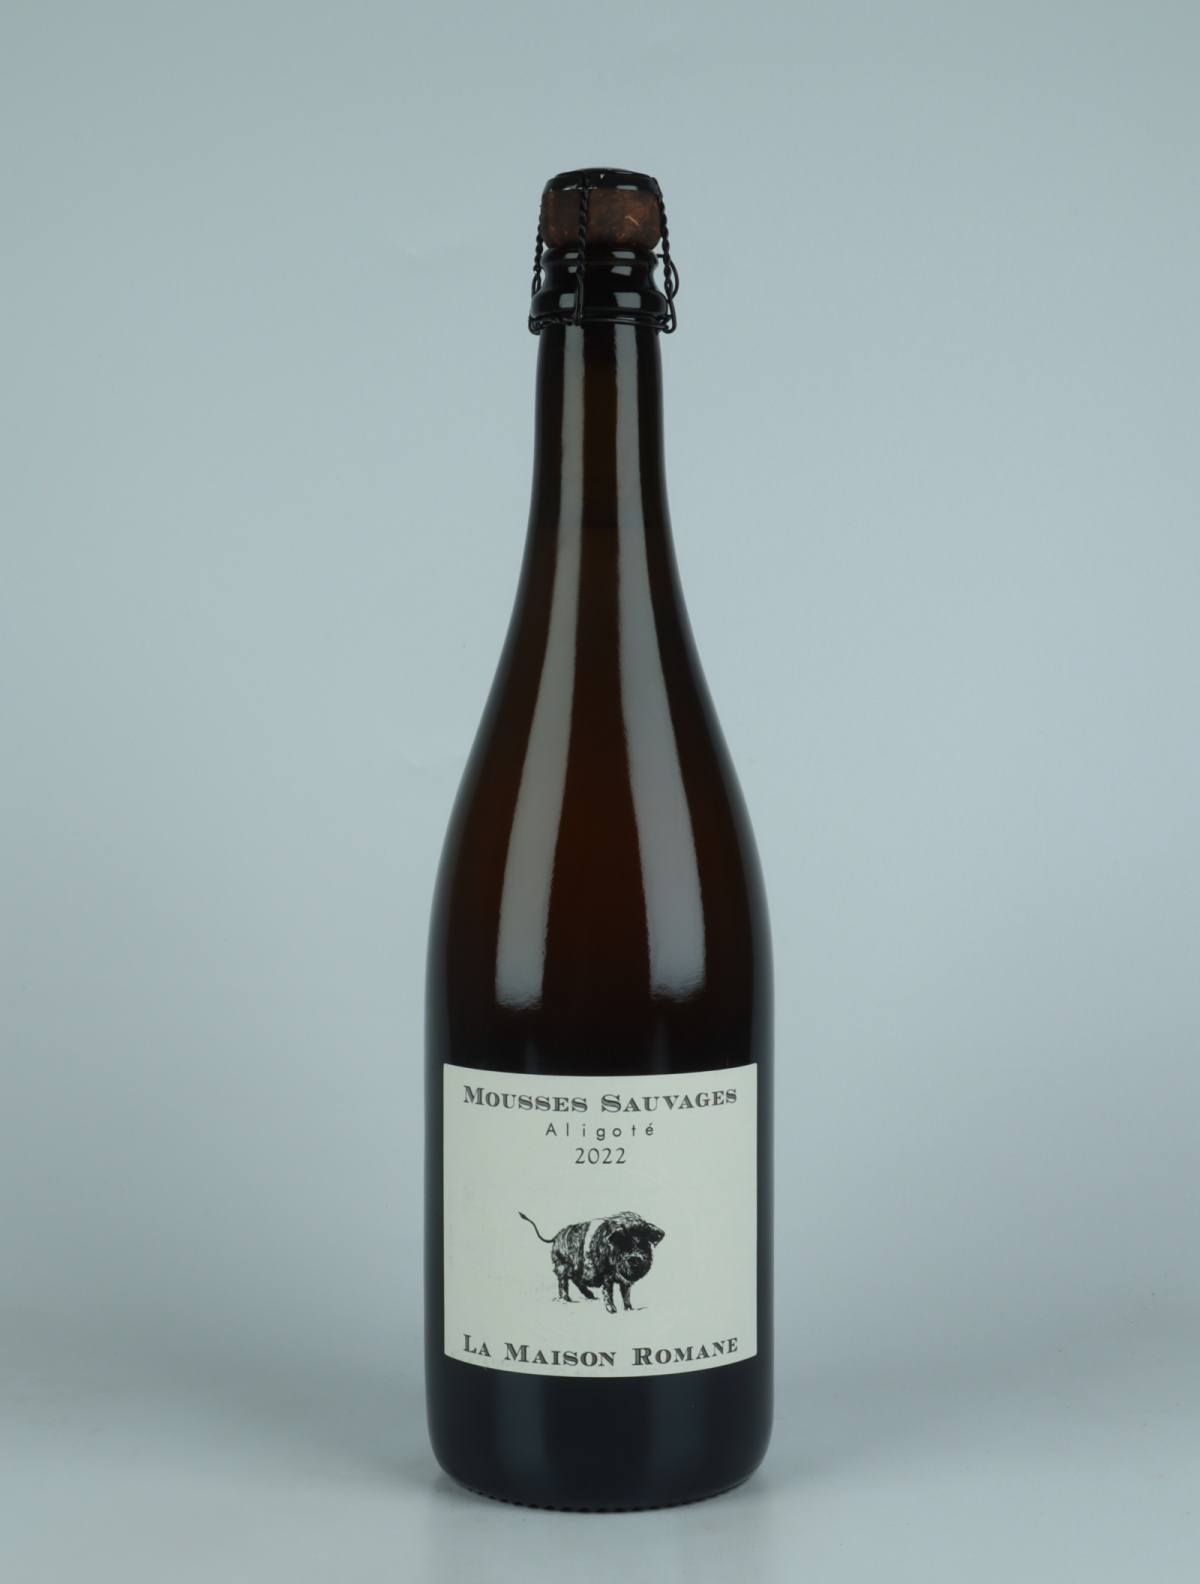 A bottle 2022 Mousses Sauvages Aligoté Beer from La Maison Romane, Burgundy in France